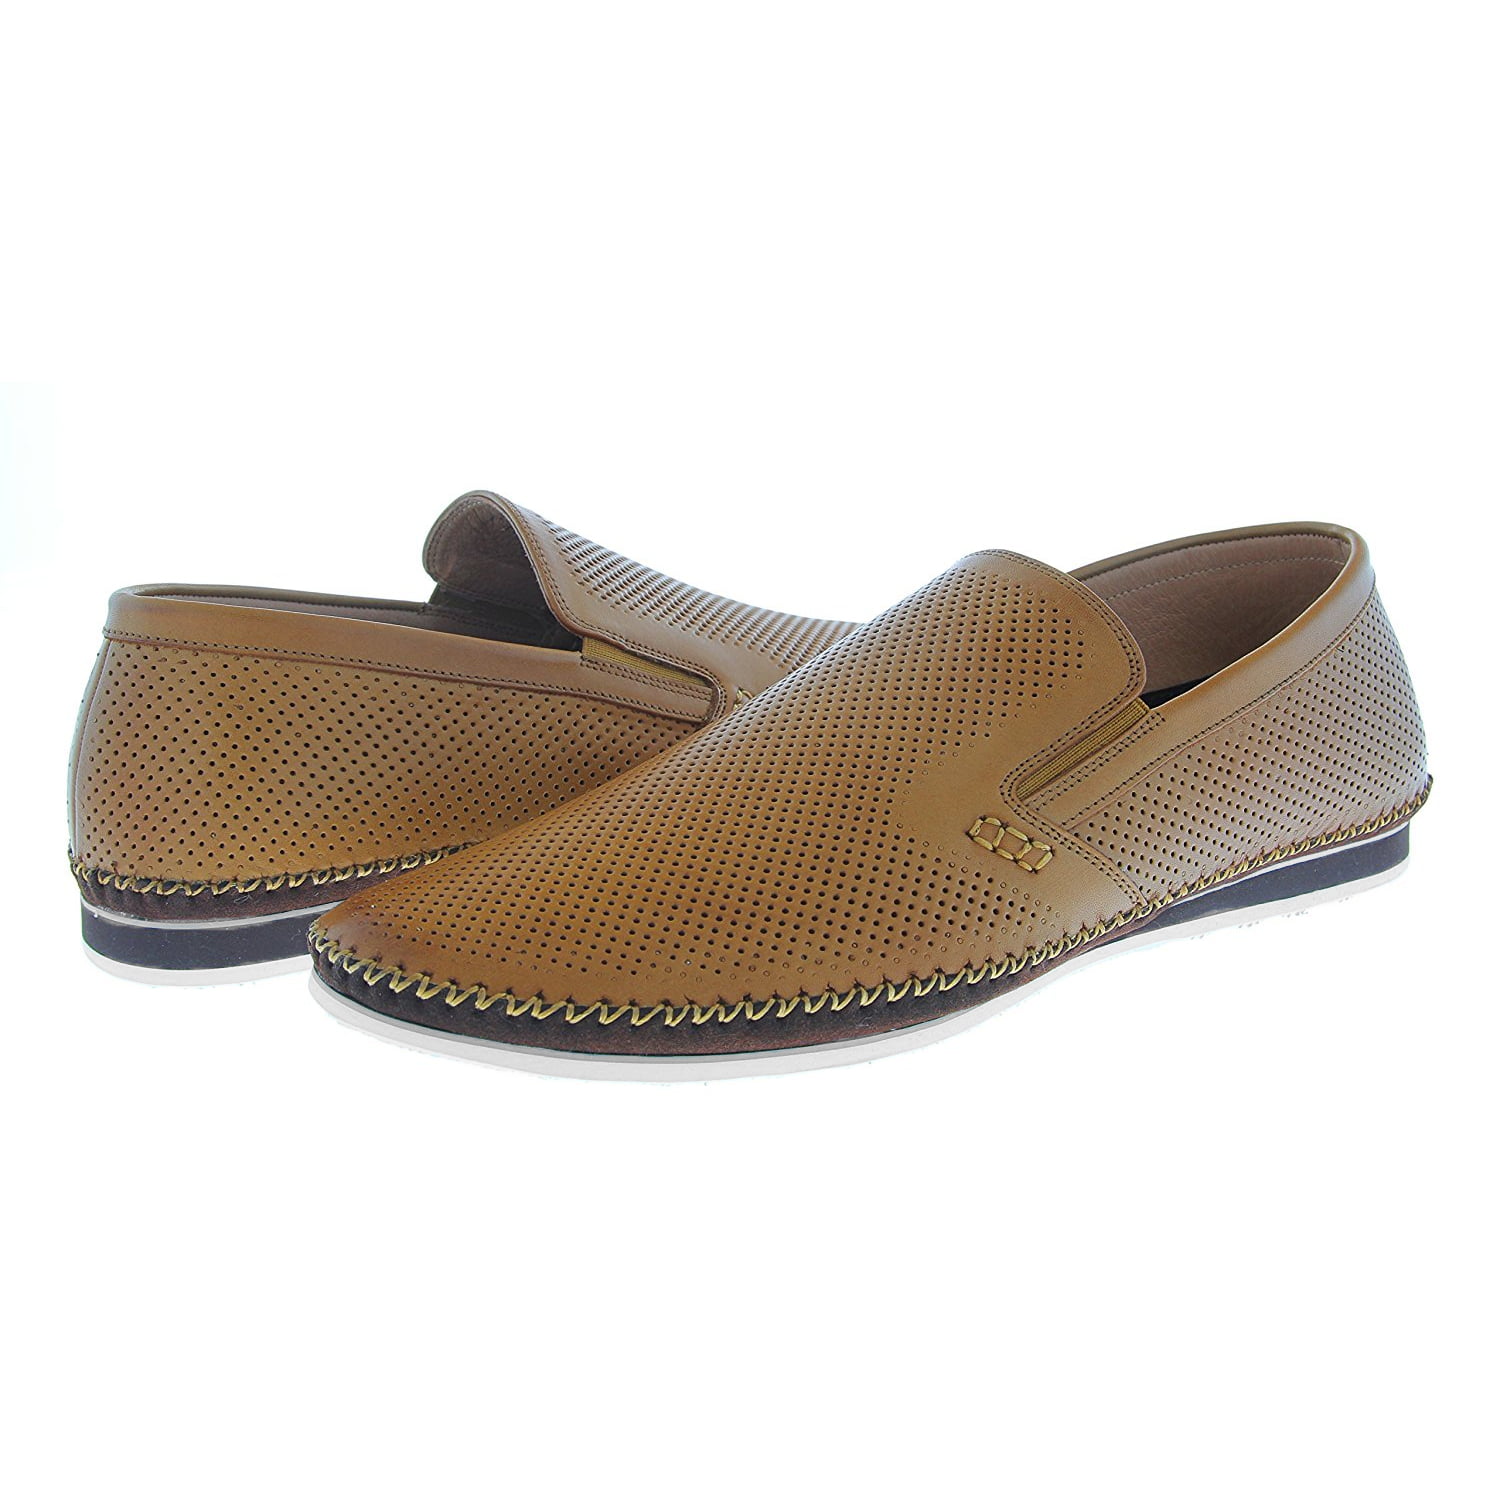 Zanzara Mens Merz Perforated Leather Slip On Shoes (Cognac, 9 ...